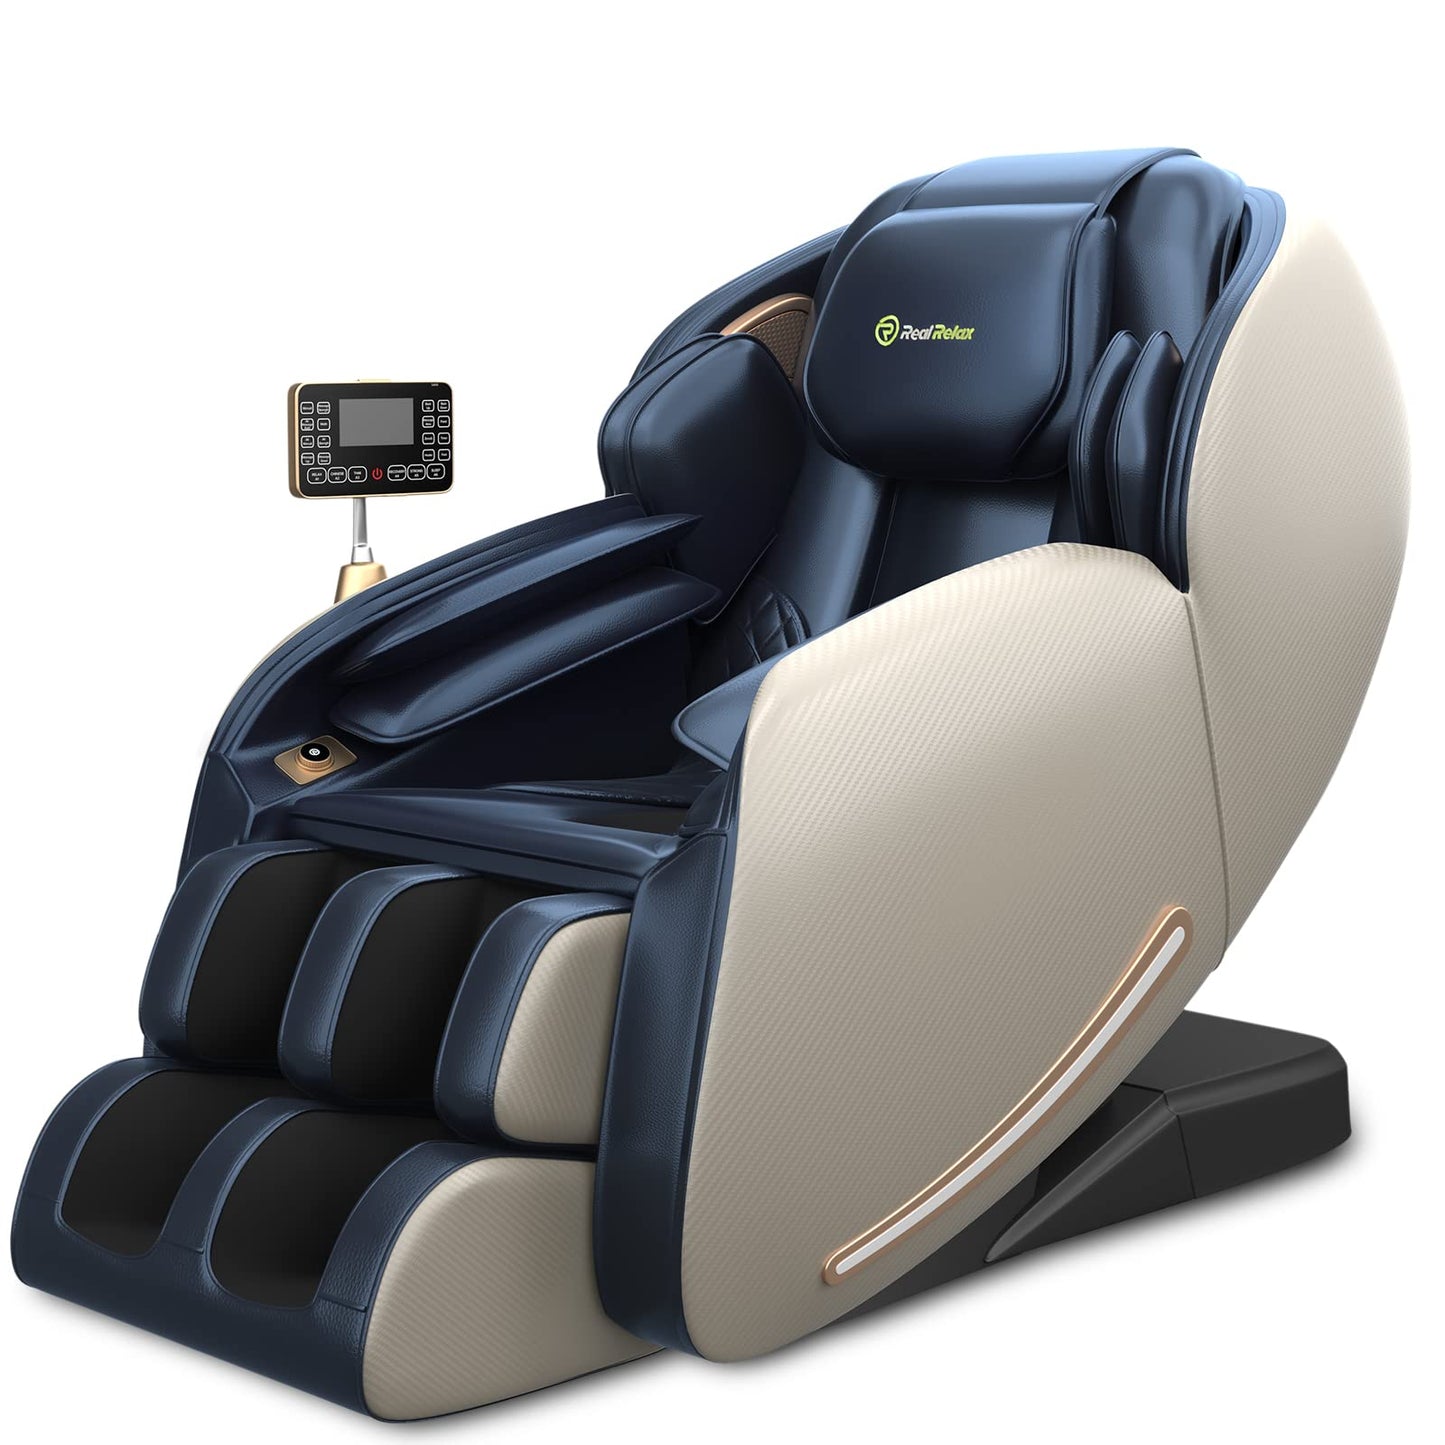 Real Relax Massage Chair, Full Body Zero Gravity SL-Track Shiatsu Massage Recliner Chair with Heat Body Scan Bluetooth Foot Roller, Favor-06 Blue